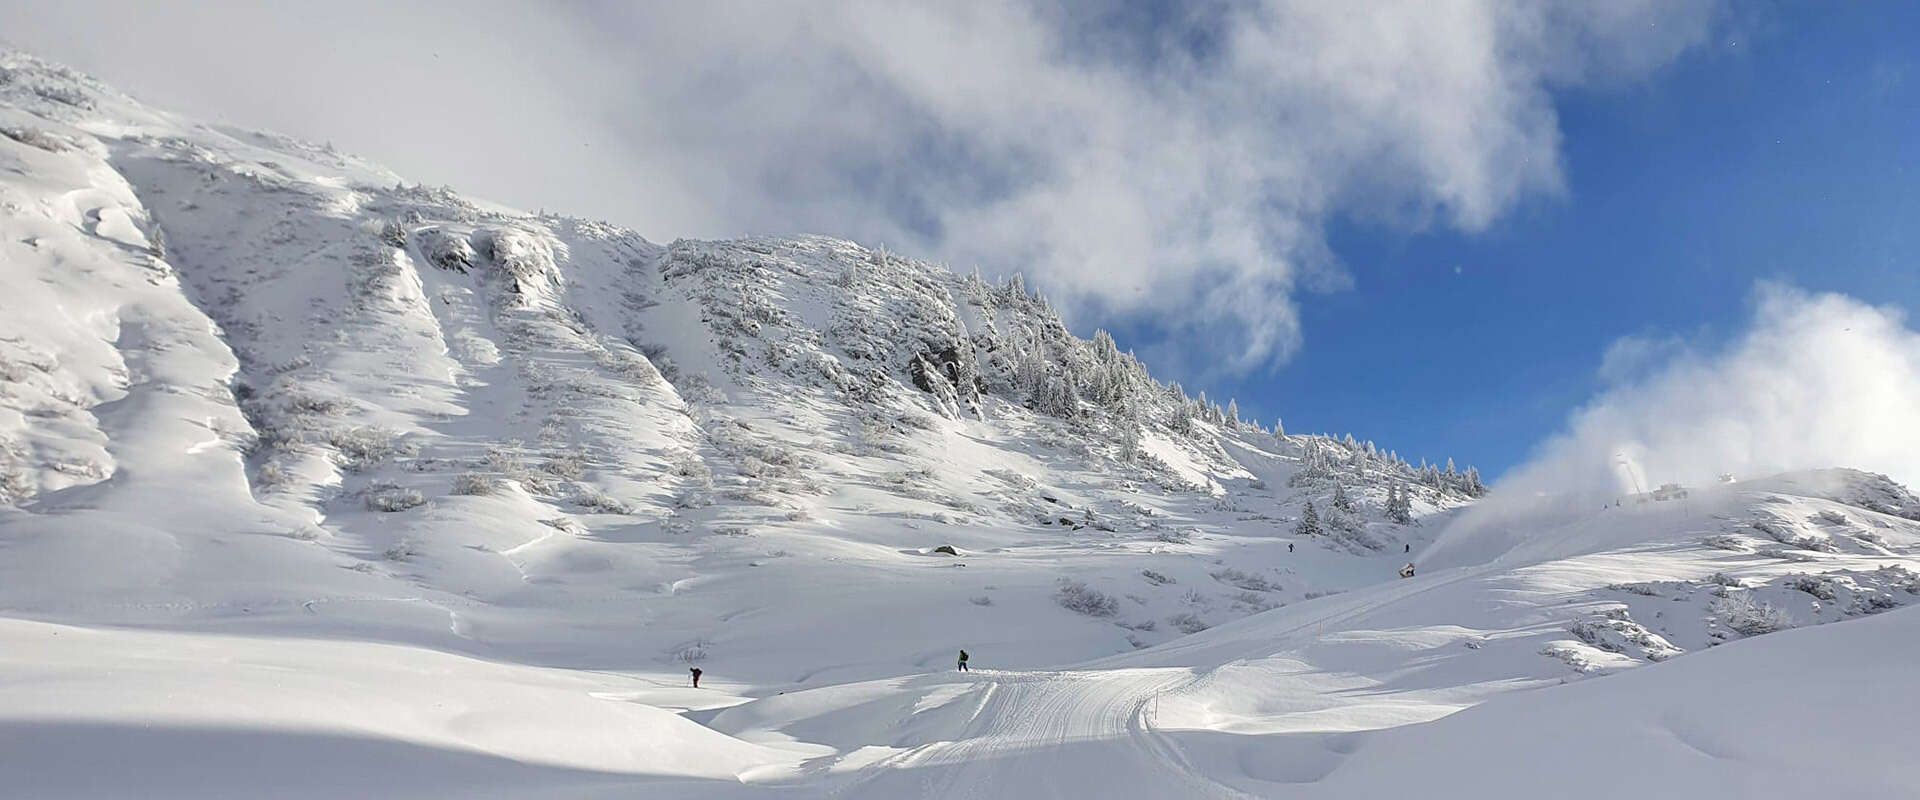 Arlberg ski area with guided ski tours